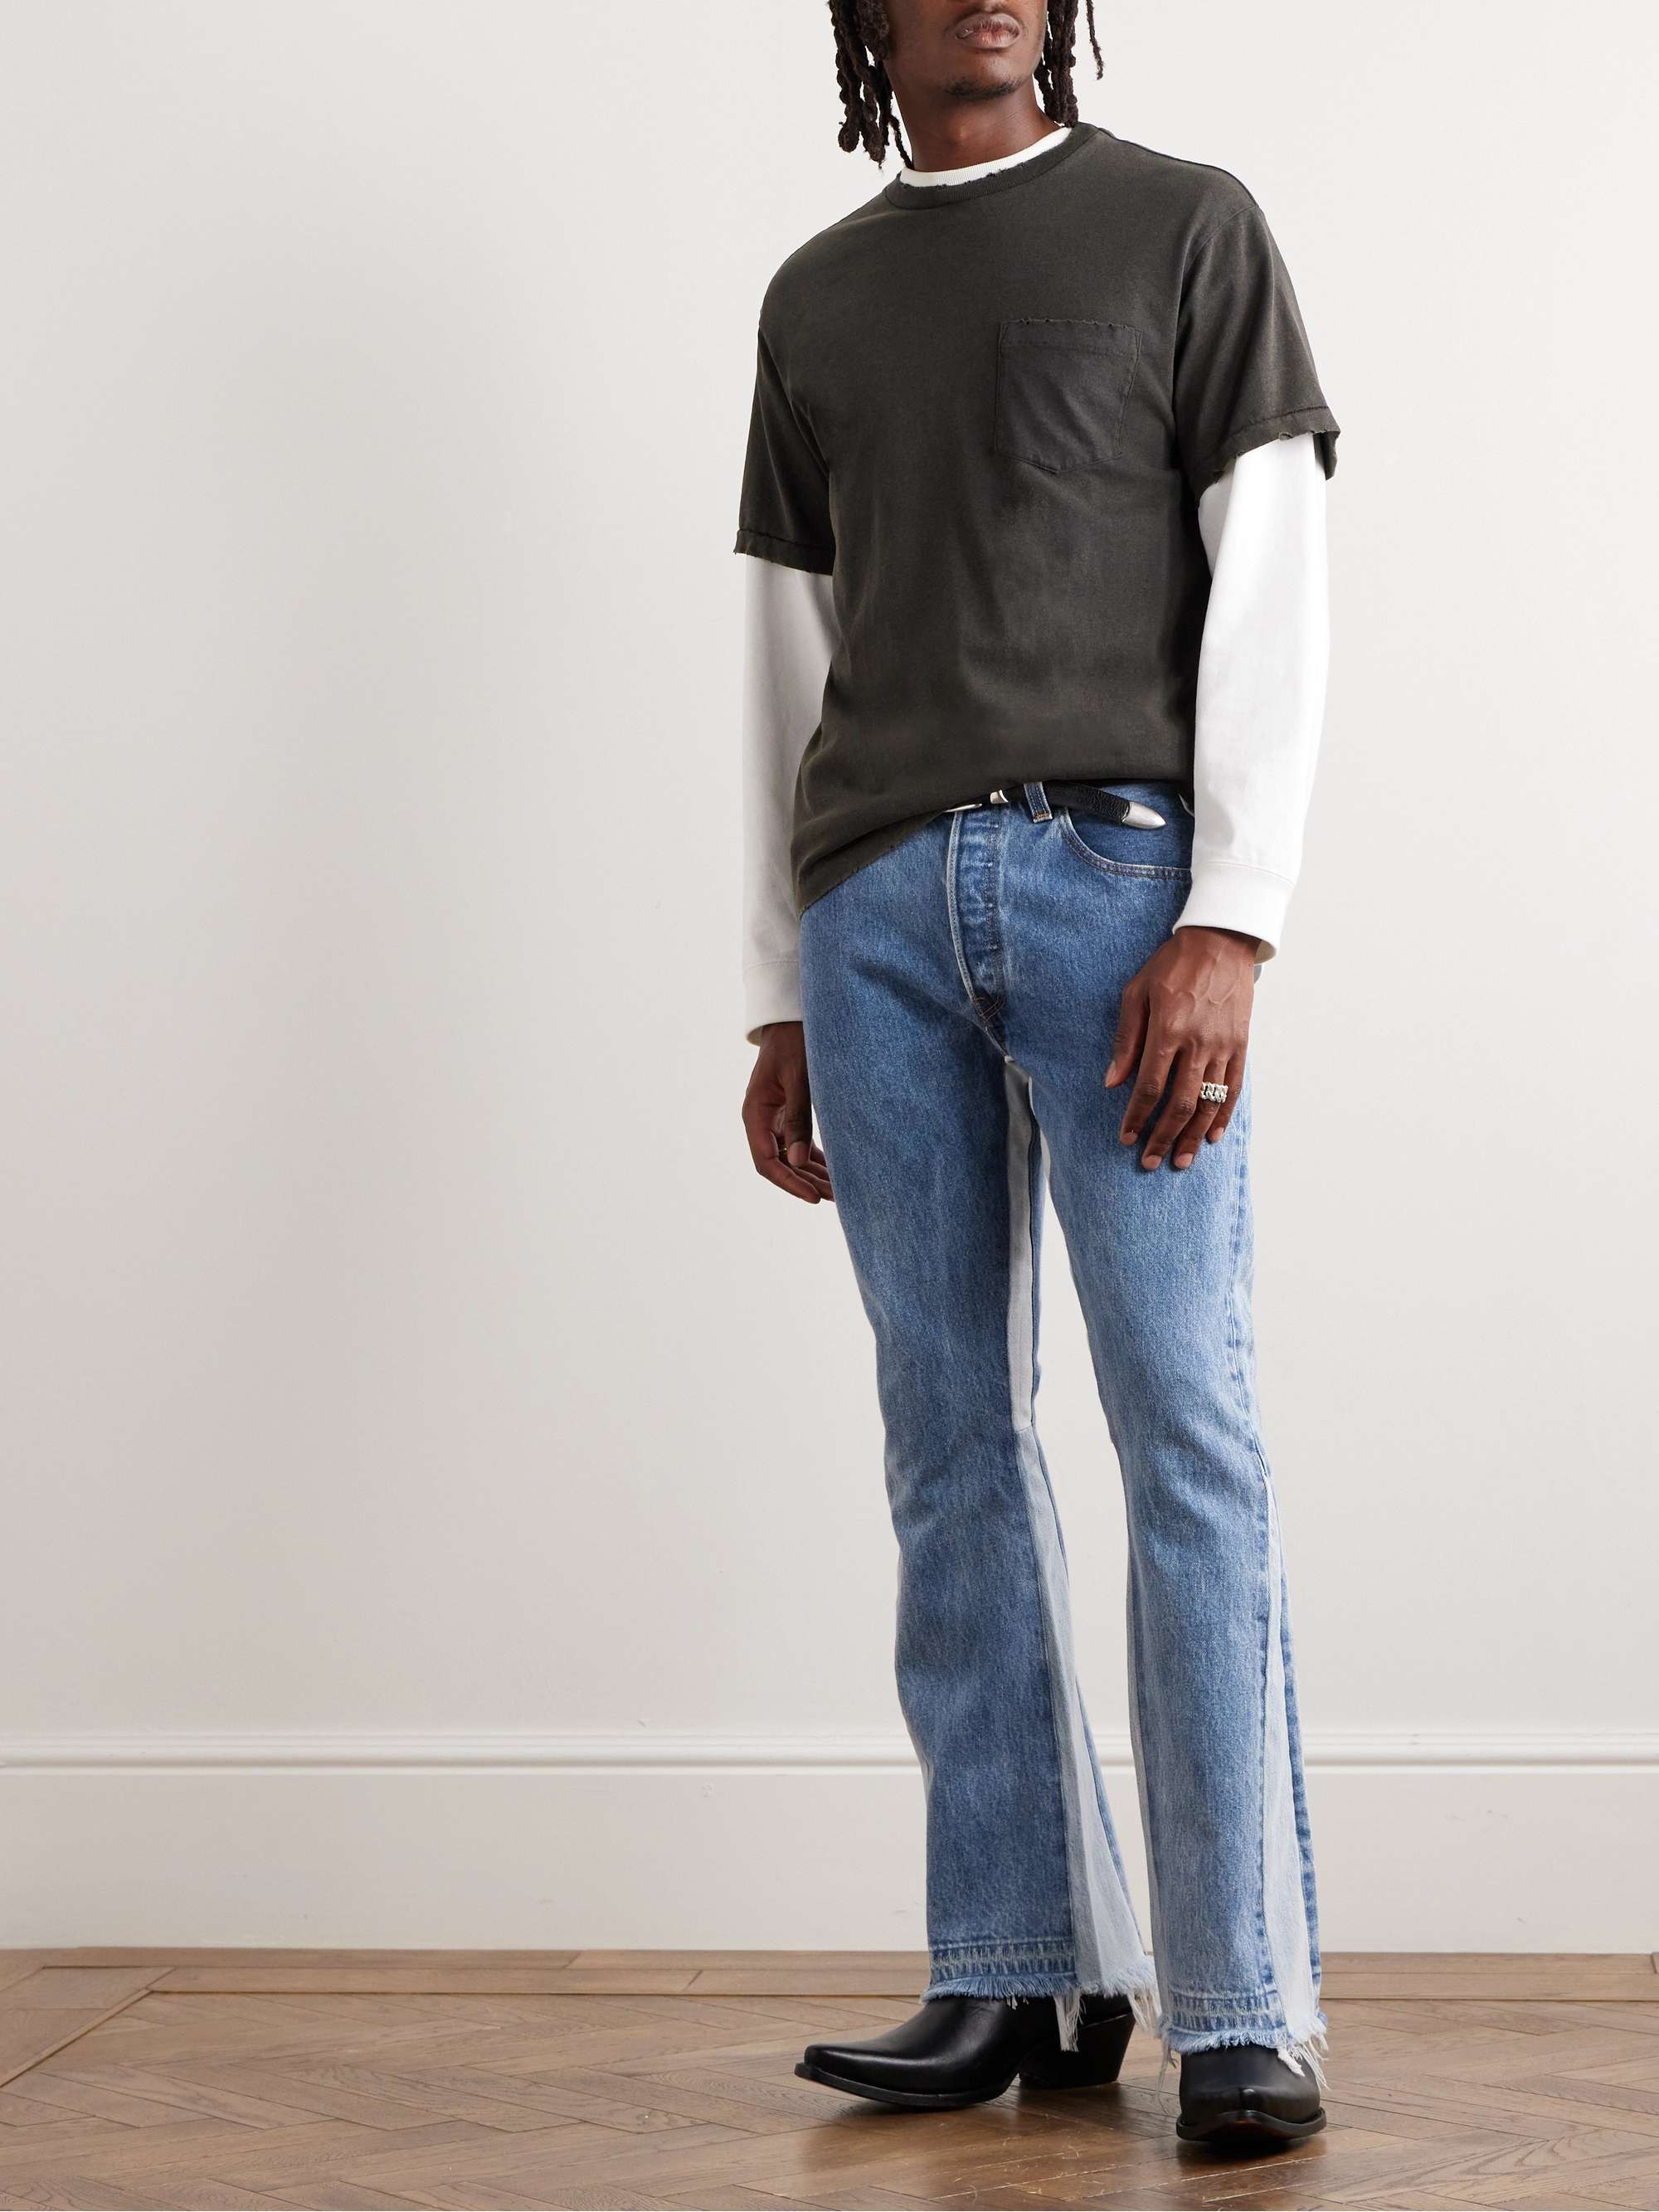 GALLERY DEPT. La Flare Distressed Two-Tone Jeans for Men | MR PORTER